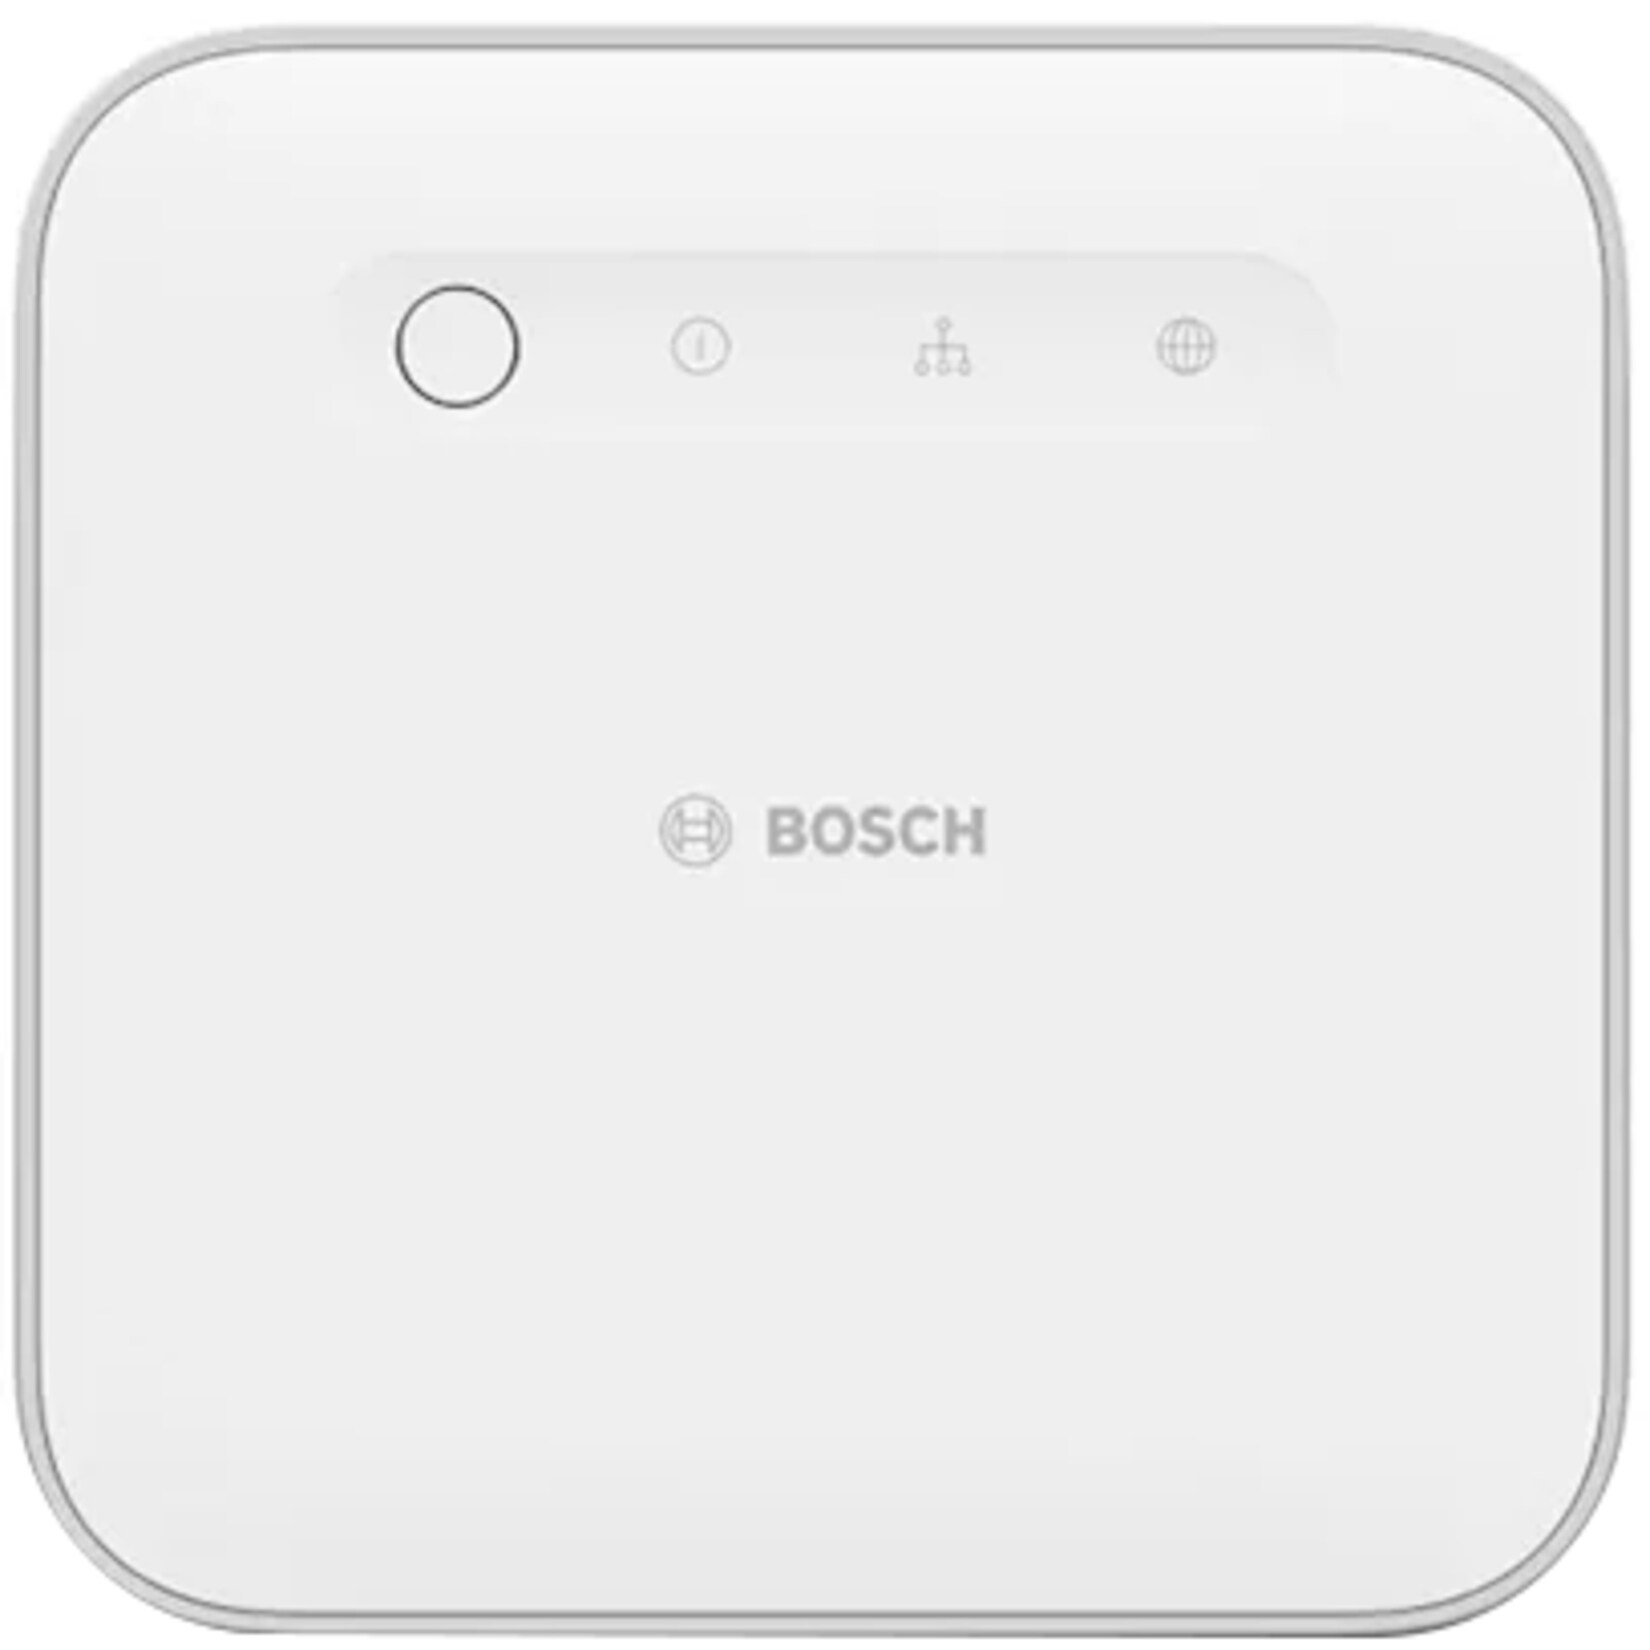 Bosch Zentrale Smart Home Controller II